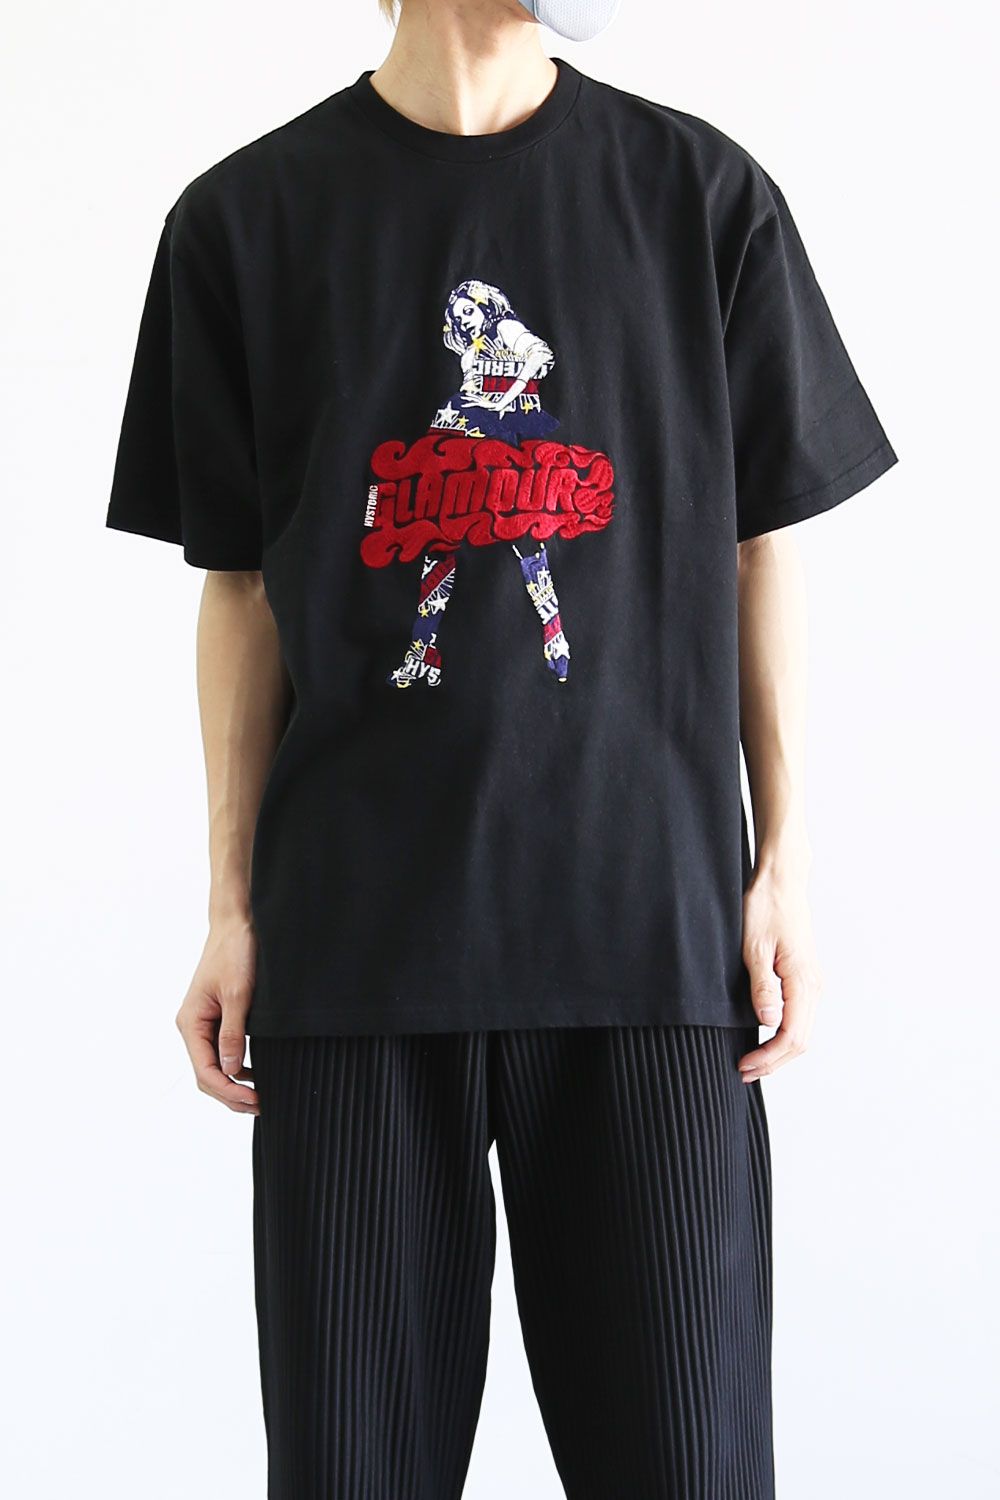 HYSTERIC GLAMOUR - VIXEN GIRL刺繍 Tシャツ / ブラック | Tempt